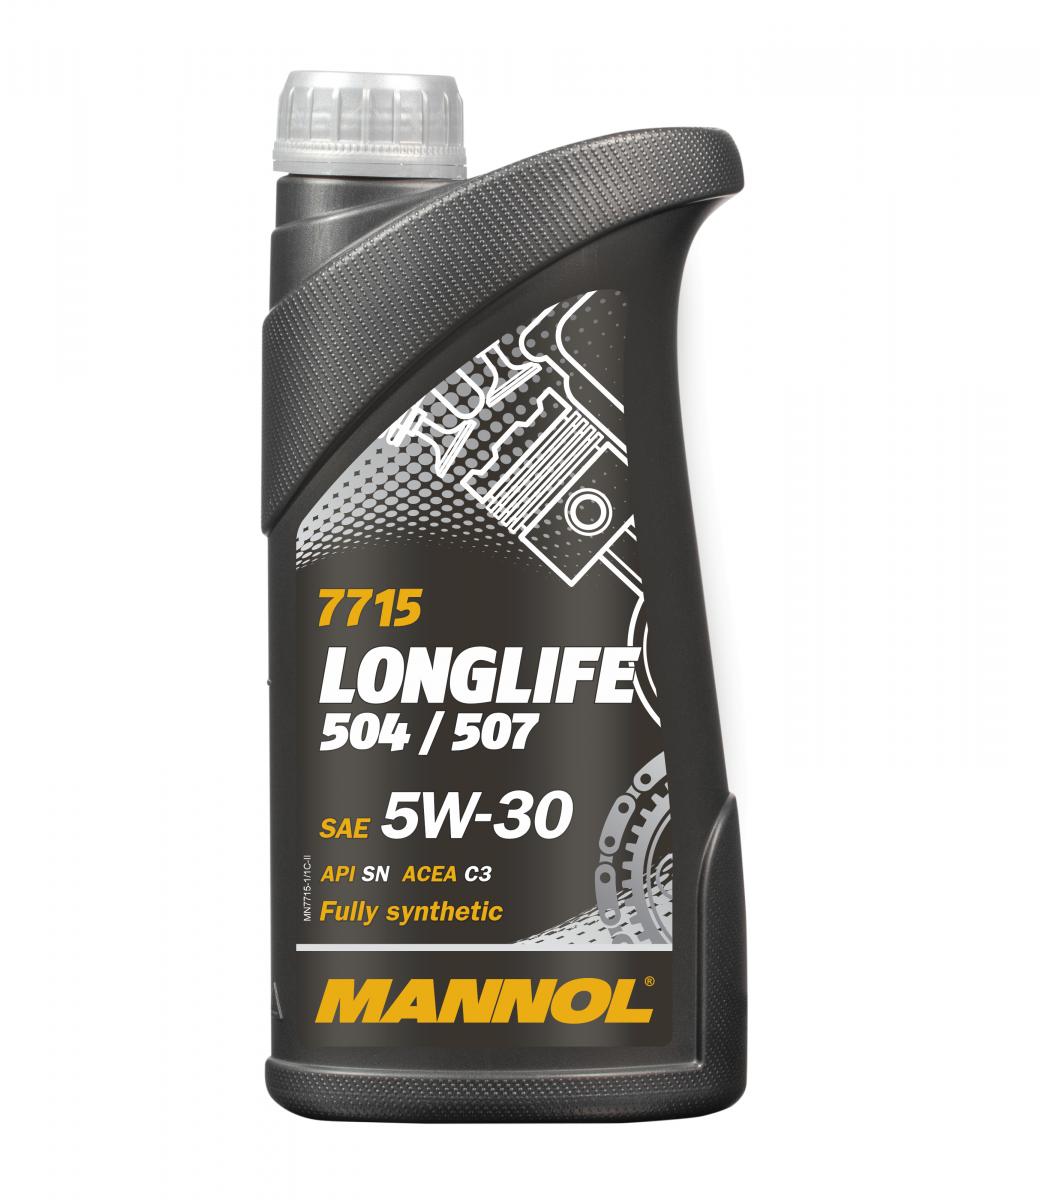 MANNOL 20L 7715 LONGLIFE 504/507 Spezialmotoröl Motoröl API